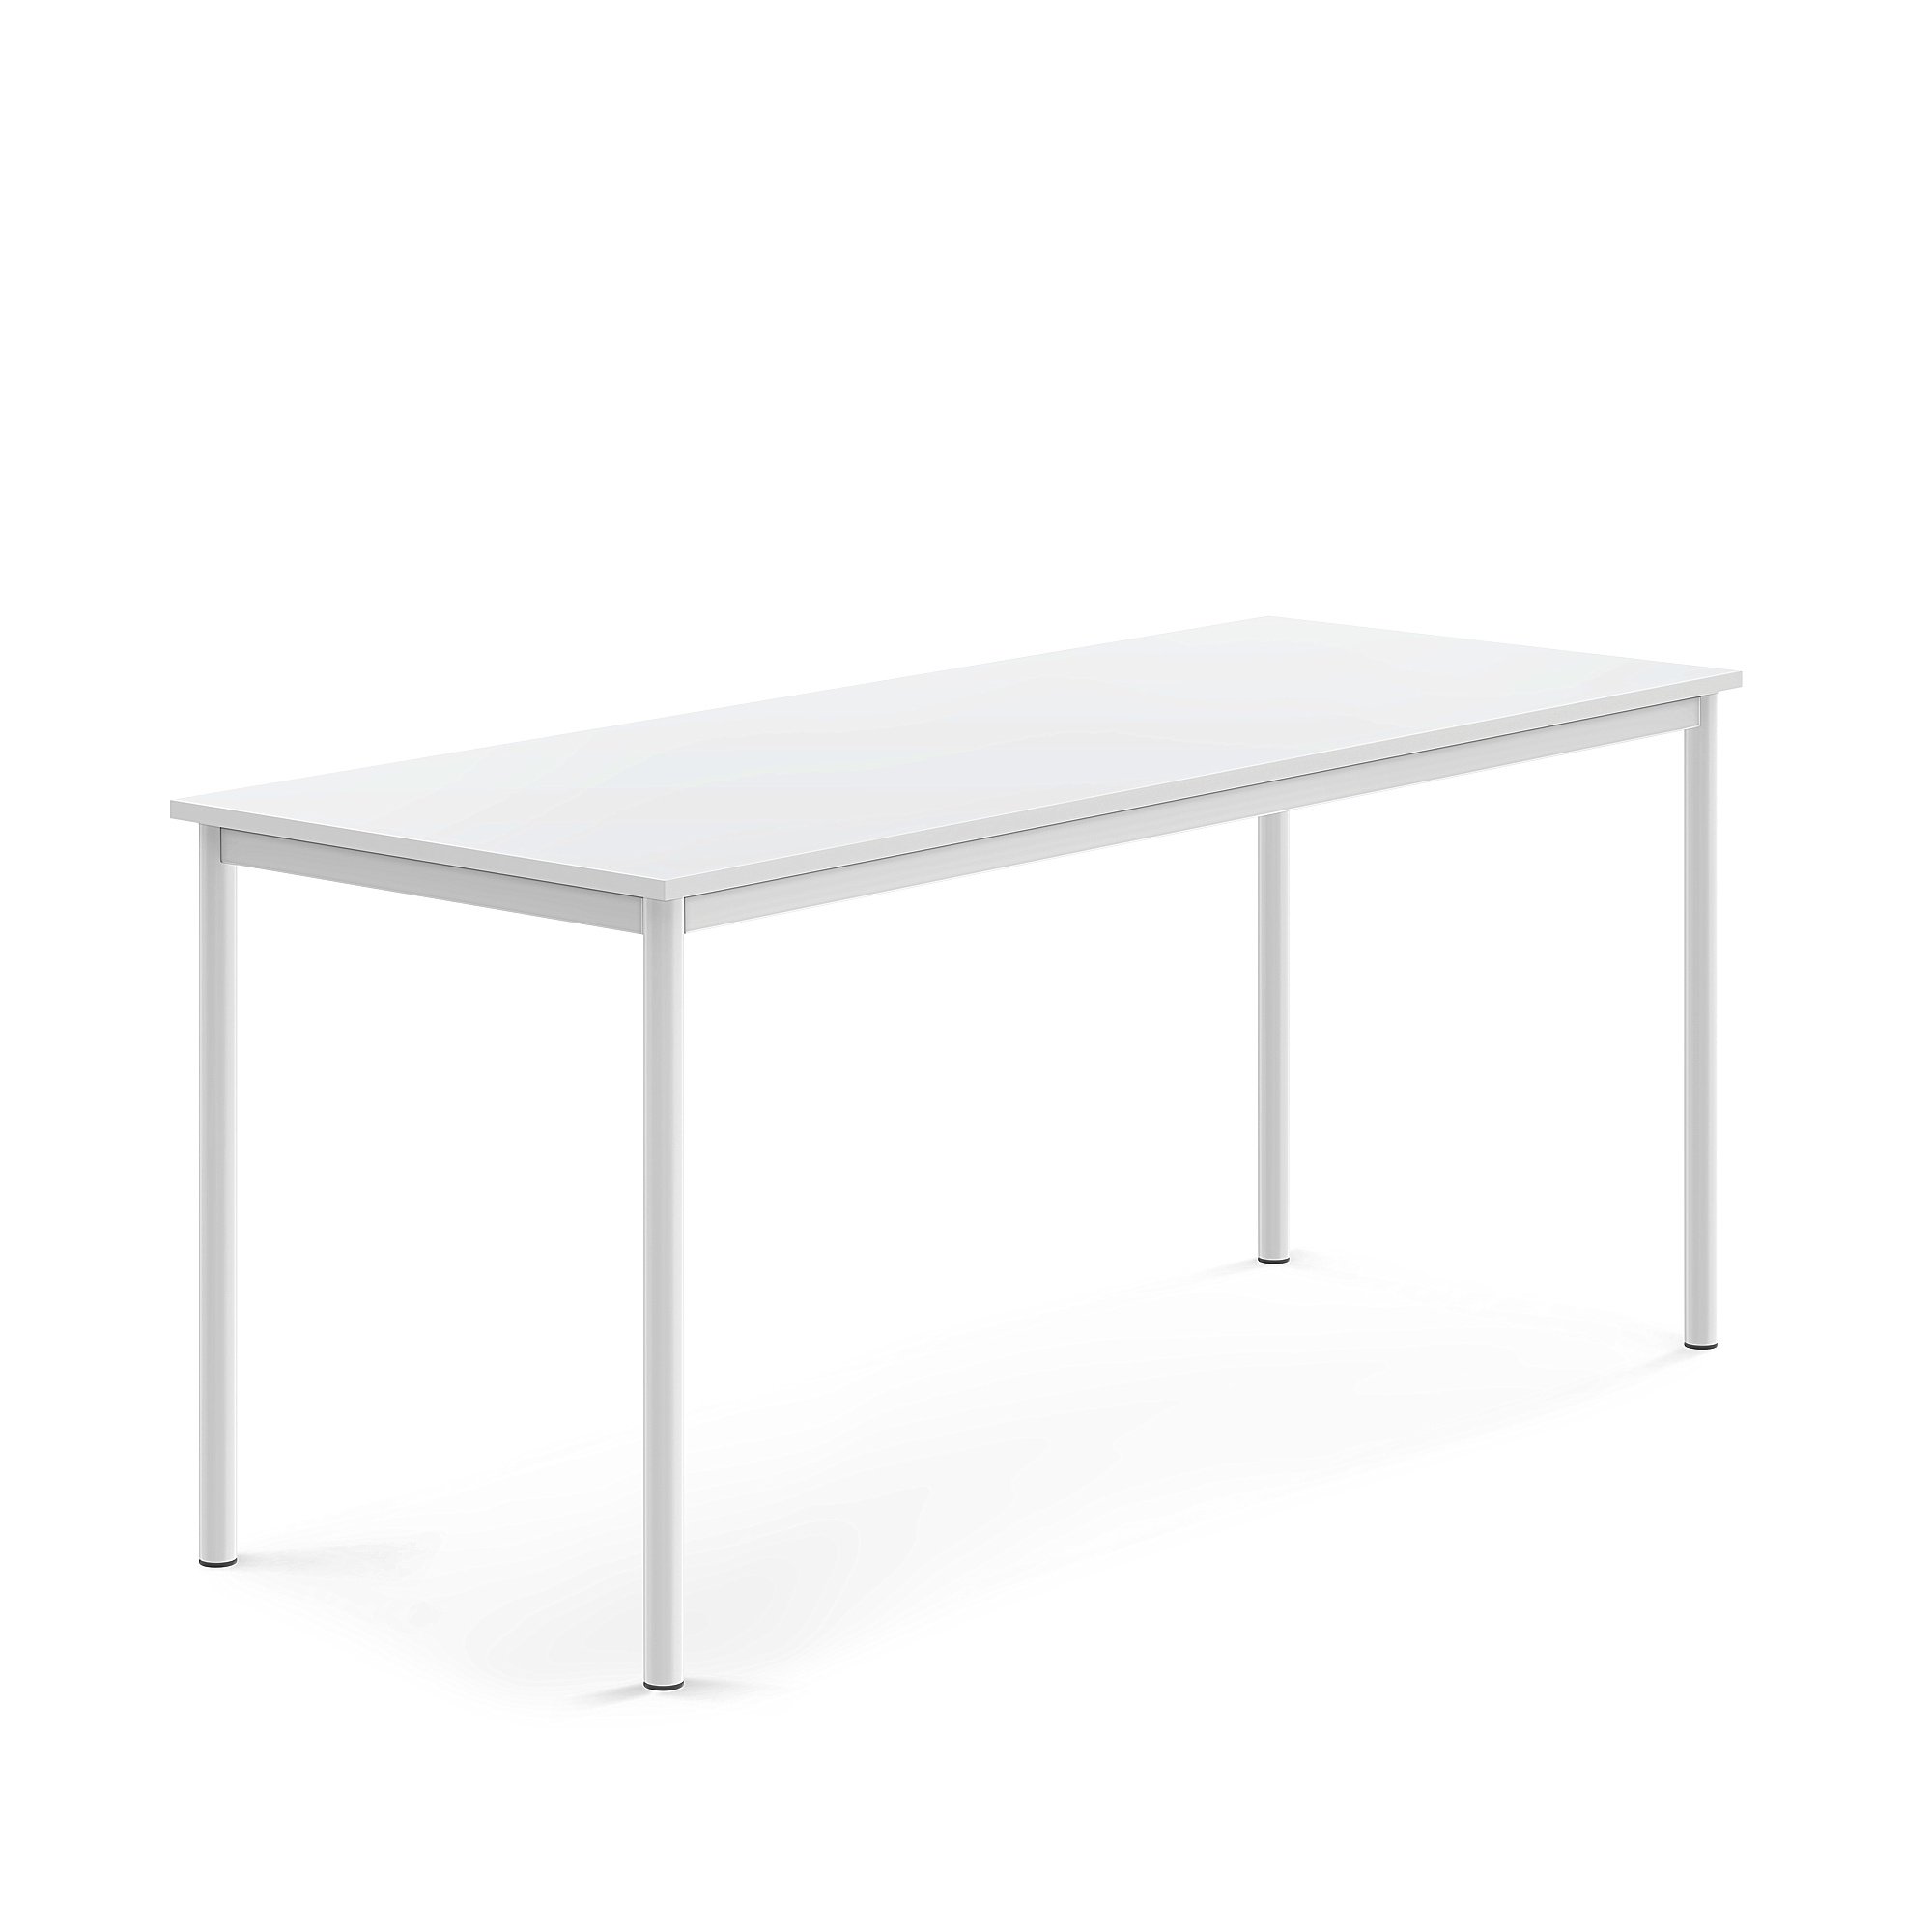 Stůl SONITUS, 1800x700x760 mm, bílé nohy, HPL deska tlumící hluk, bílá